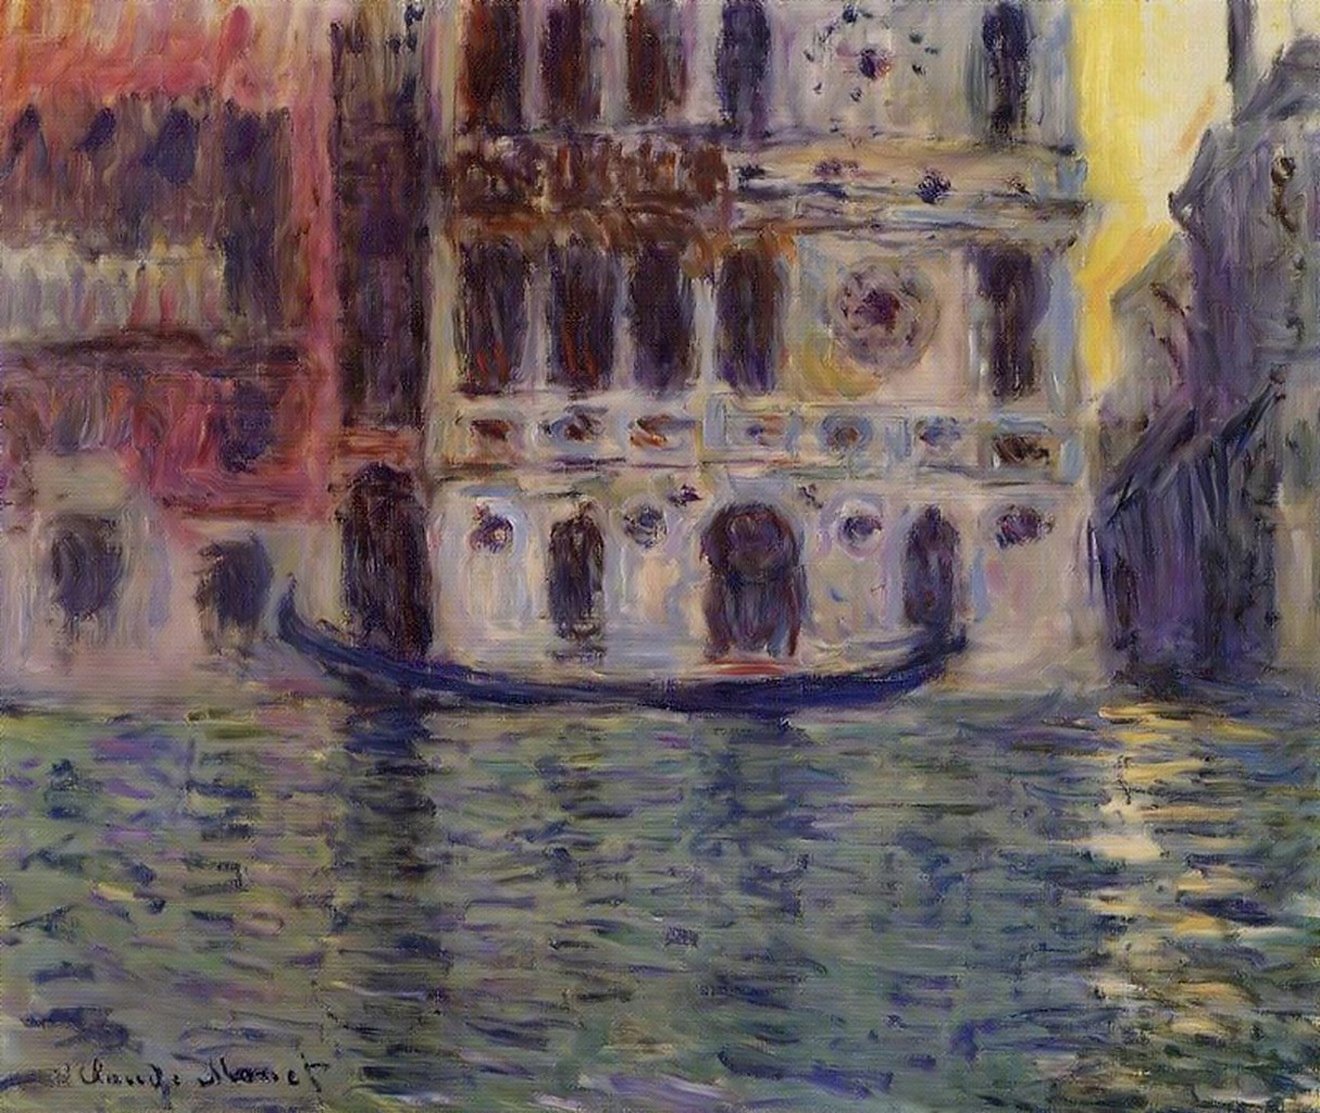 Claude+Monet-1840-1926 (562).jpg